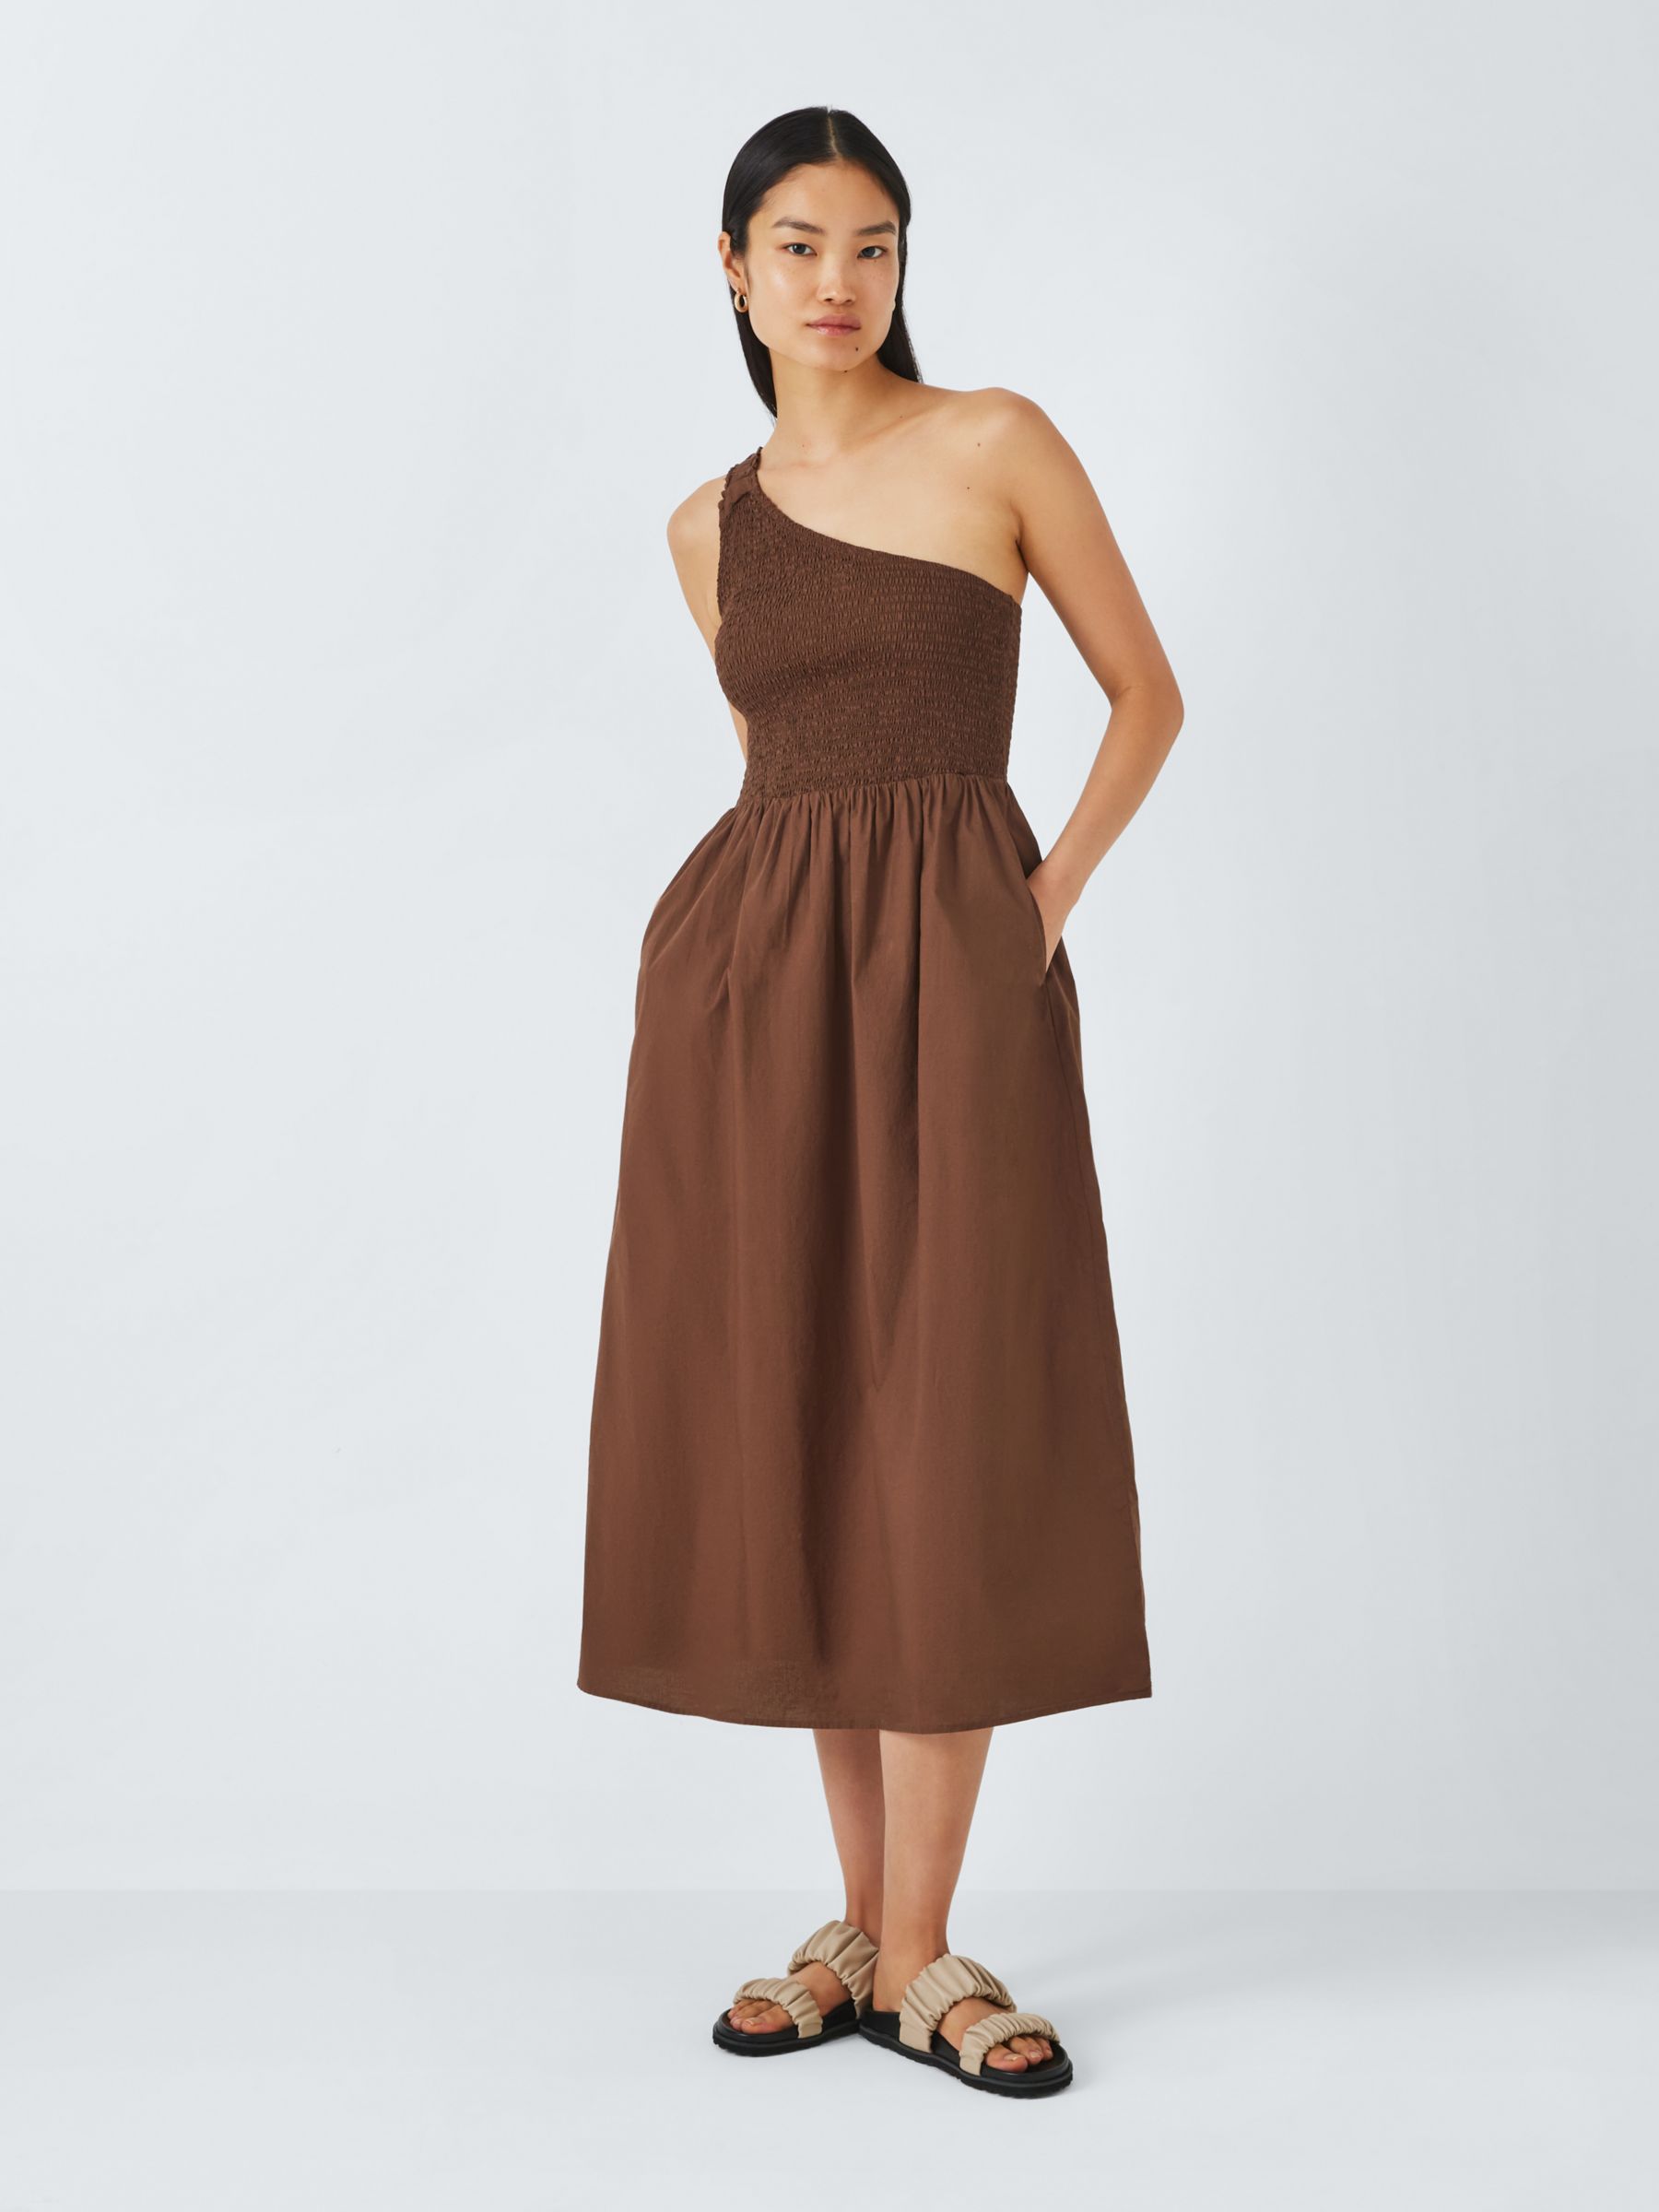 John Lewis ANYDAY Shirred Bodice Asymmetric Dress, Brown, 8